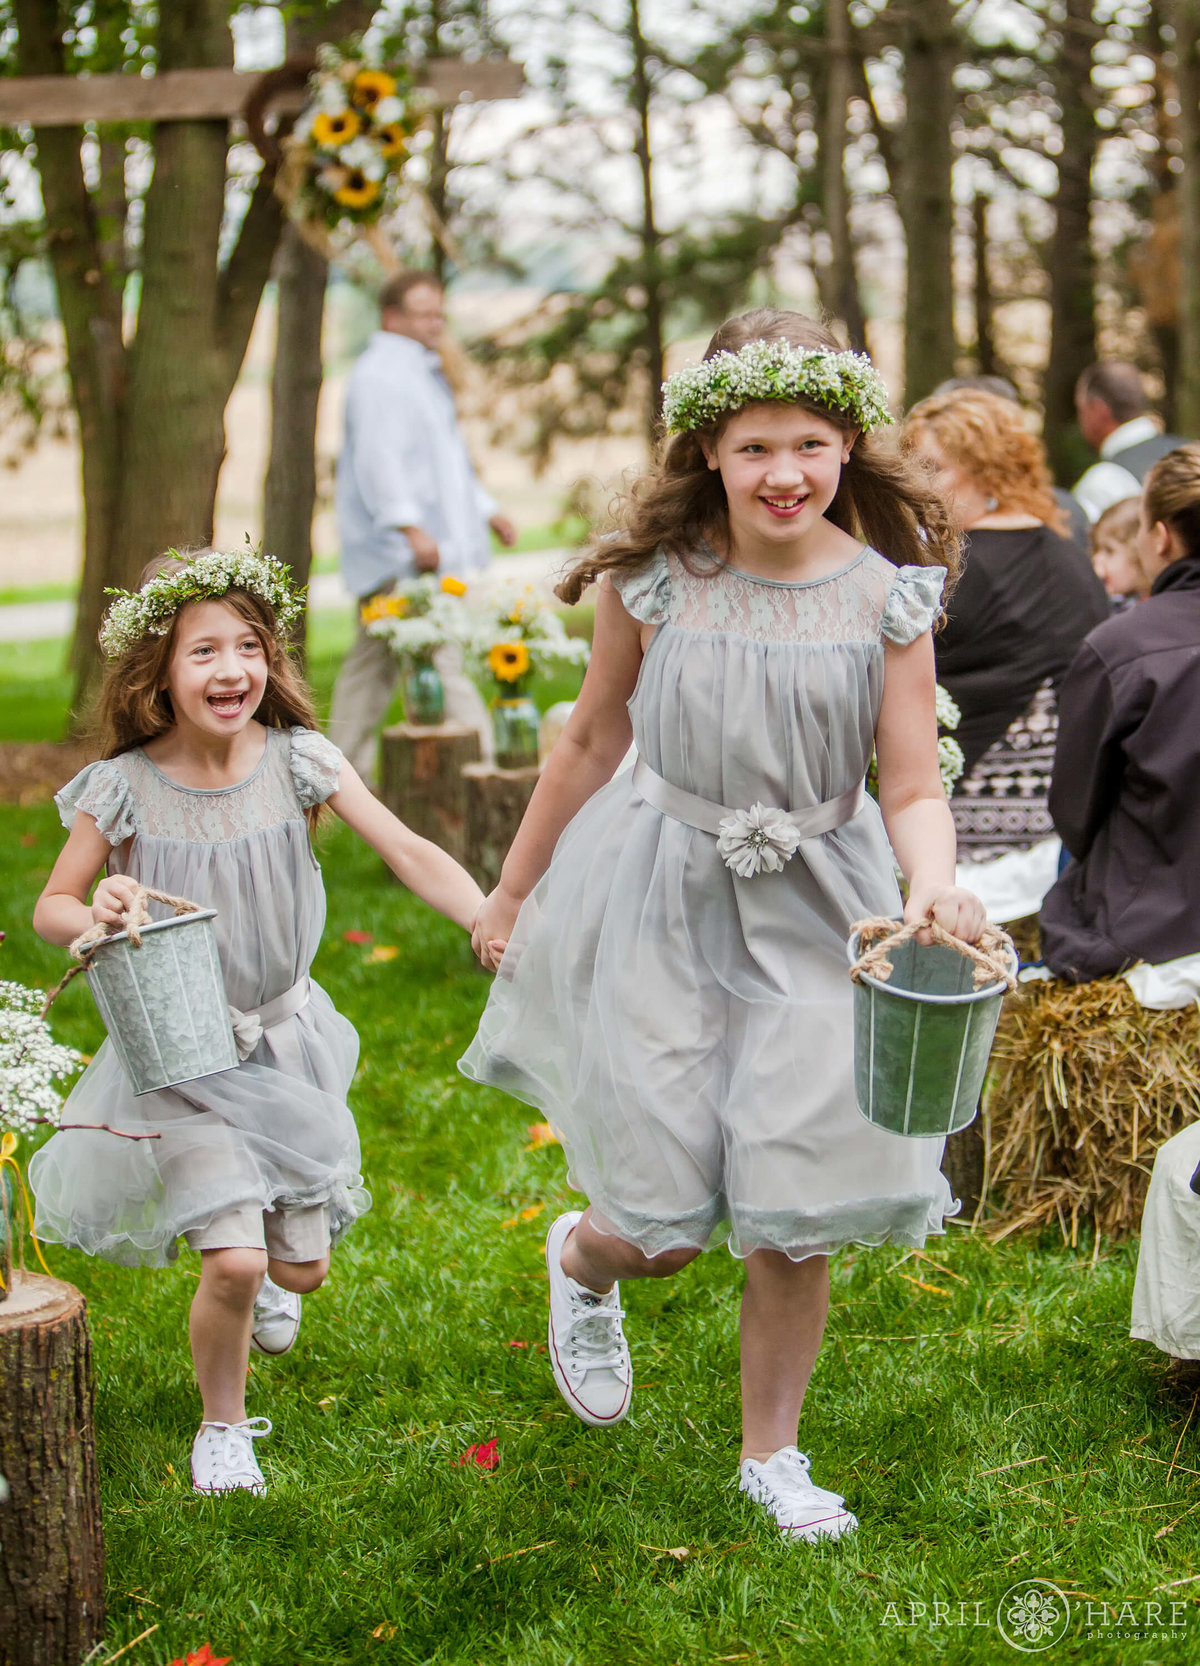 Cute flower girls wearing flower crowns run down the aisle at a private Nebraska Farm Wedding